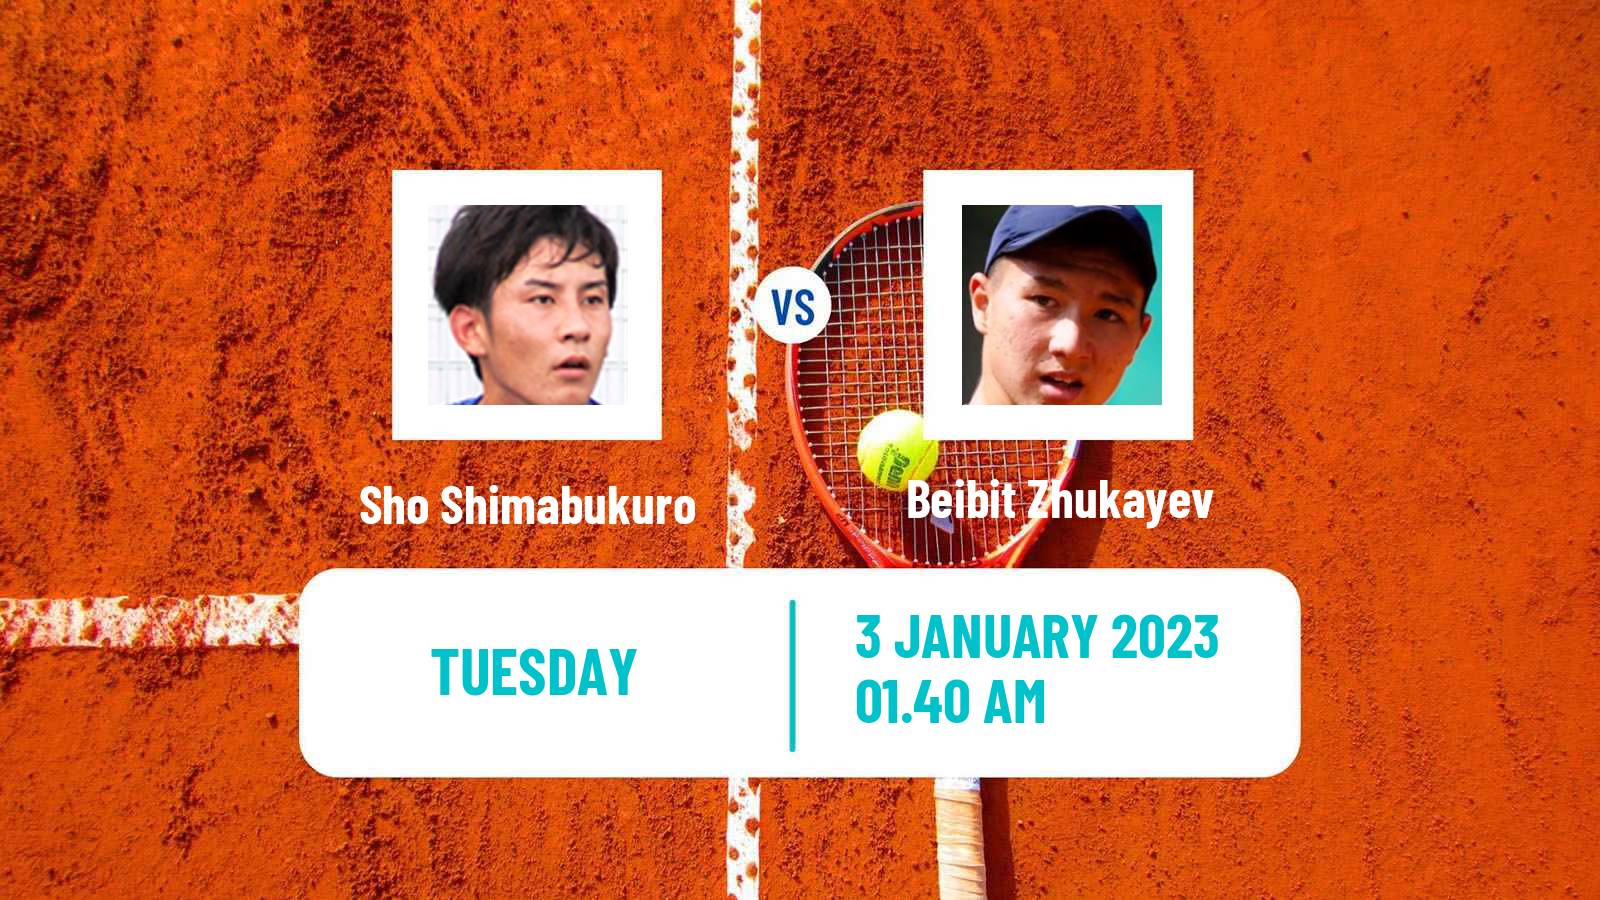 Tennis ATP Challenger Sho Shimabukuro - Beibit Zhukayev